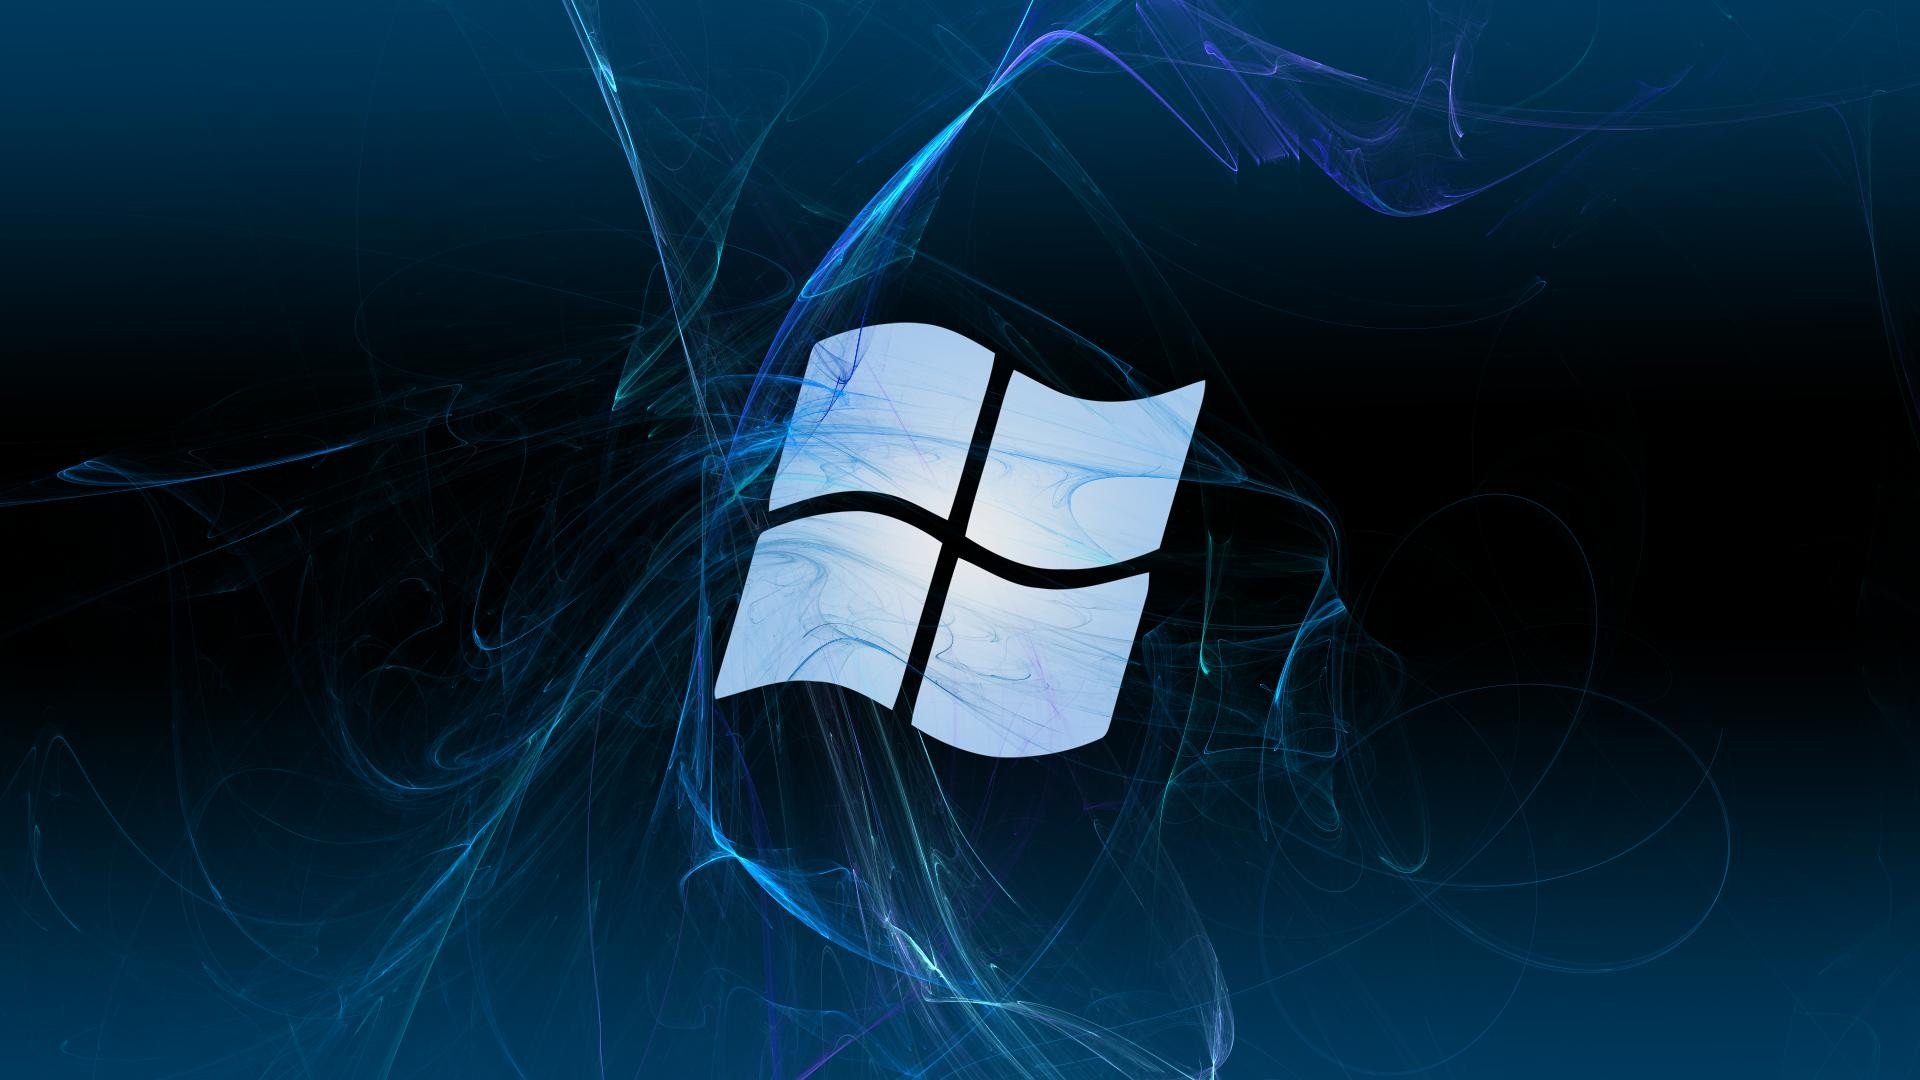 Abstract Blue Textures Microsoft Windows Logos Wallpaper 1920x1080